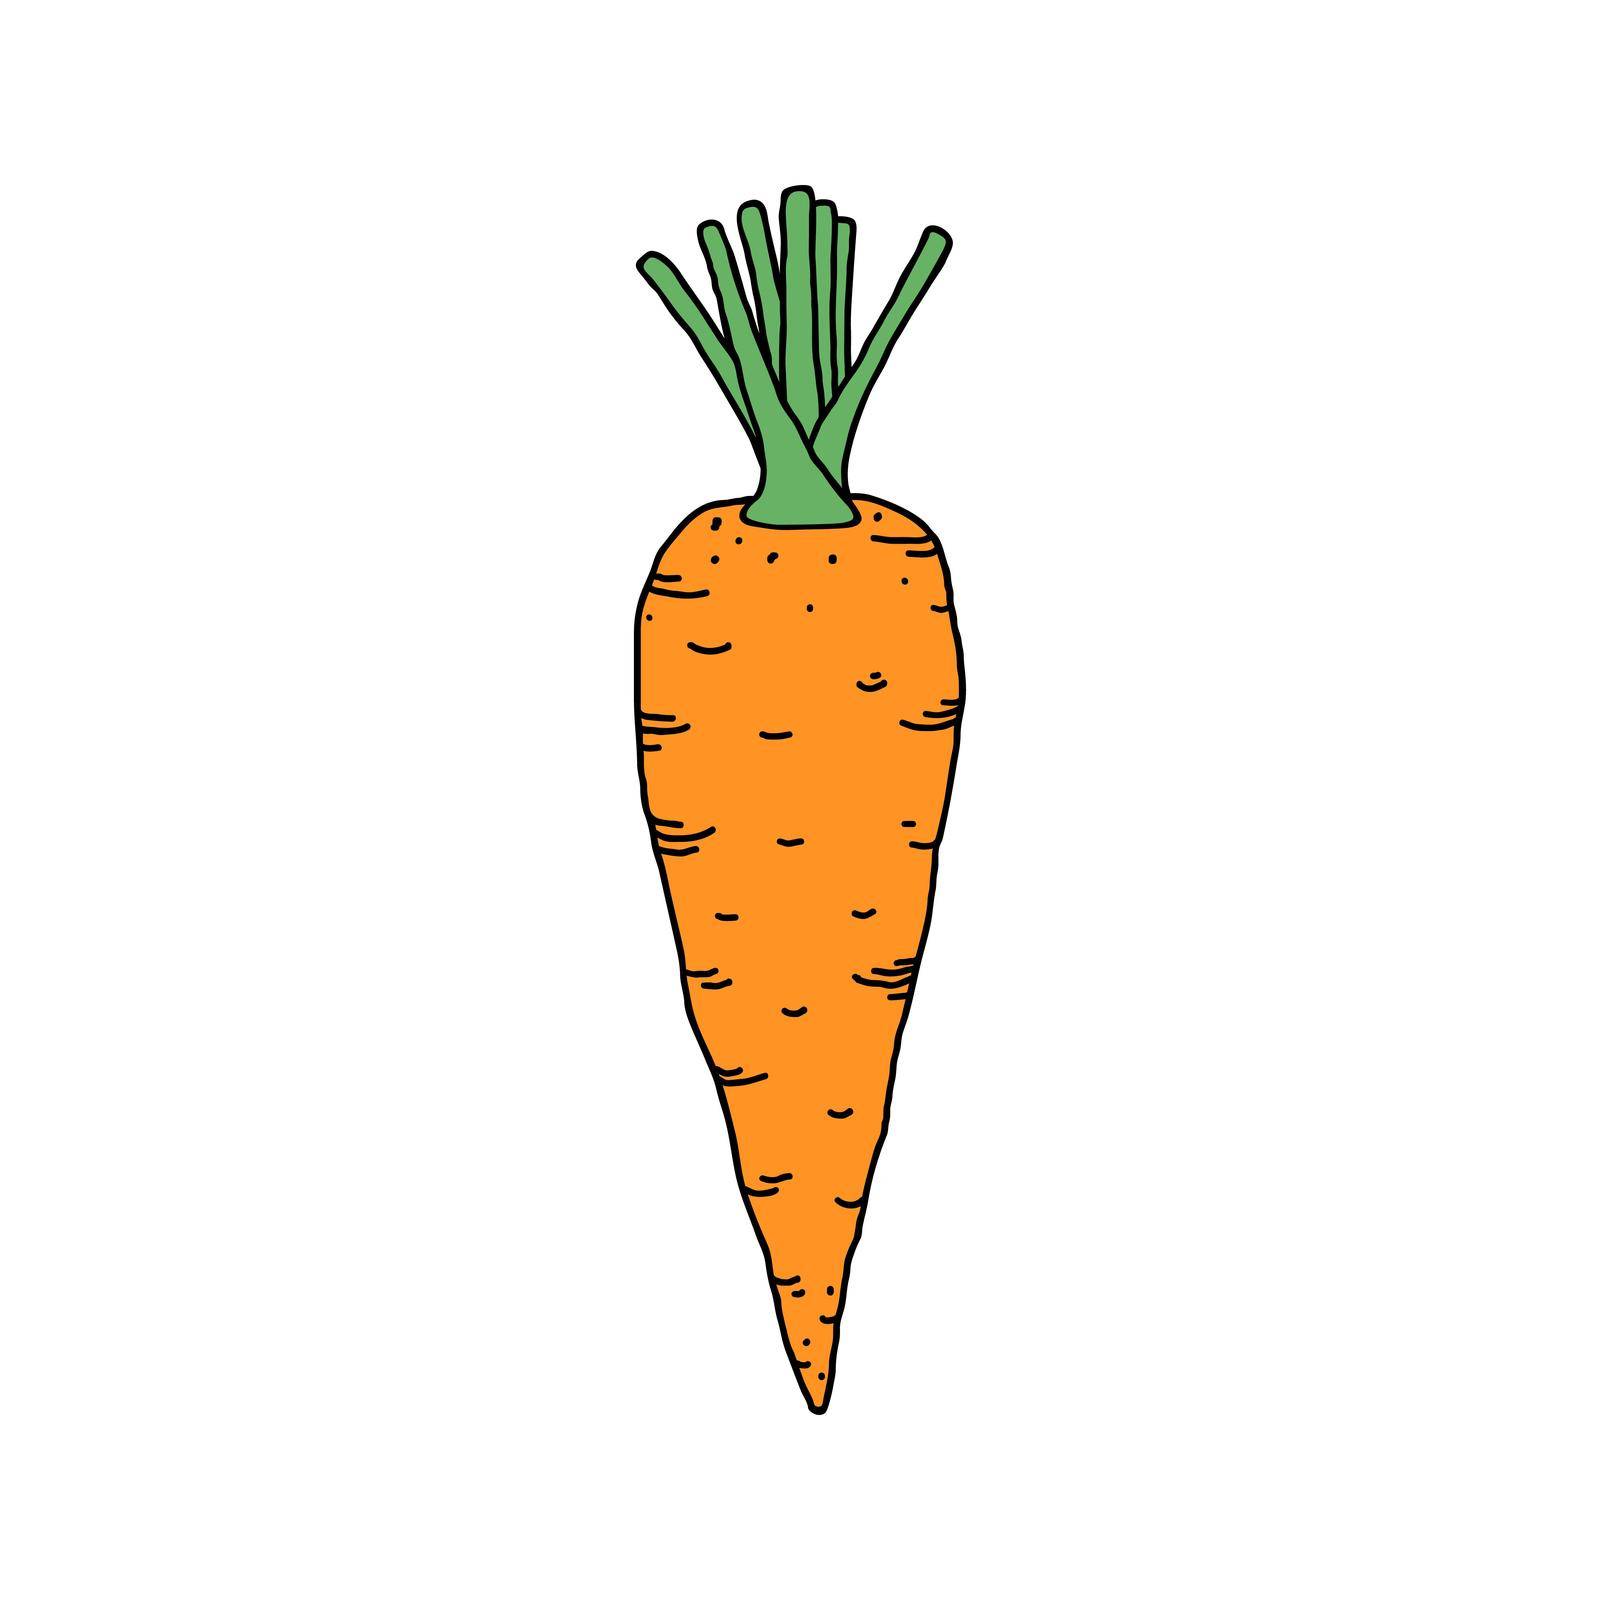 Carrot in doodle style by kiyanochka